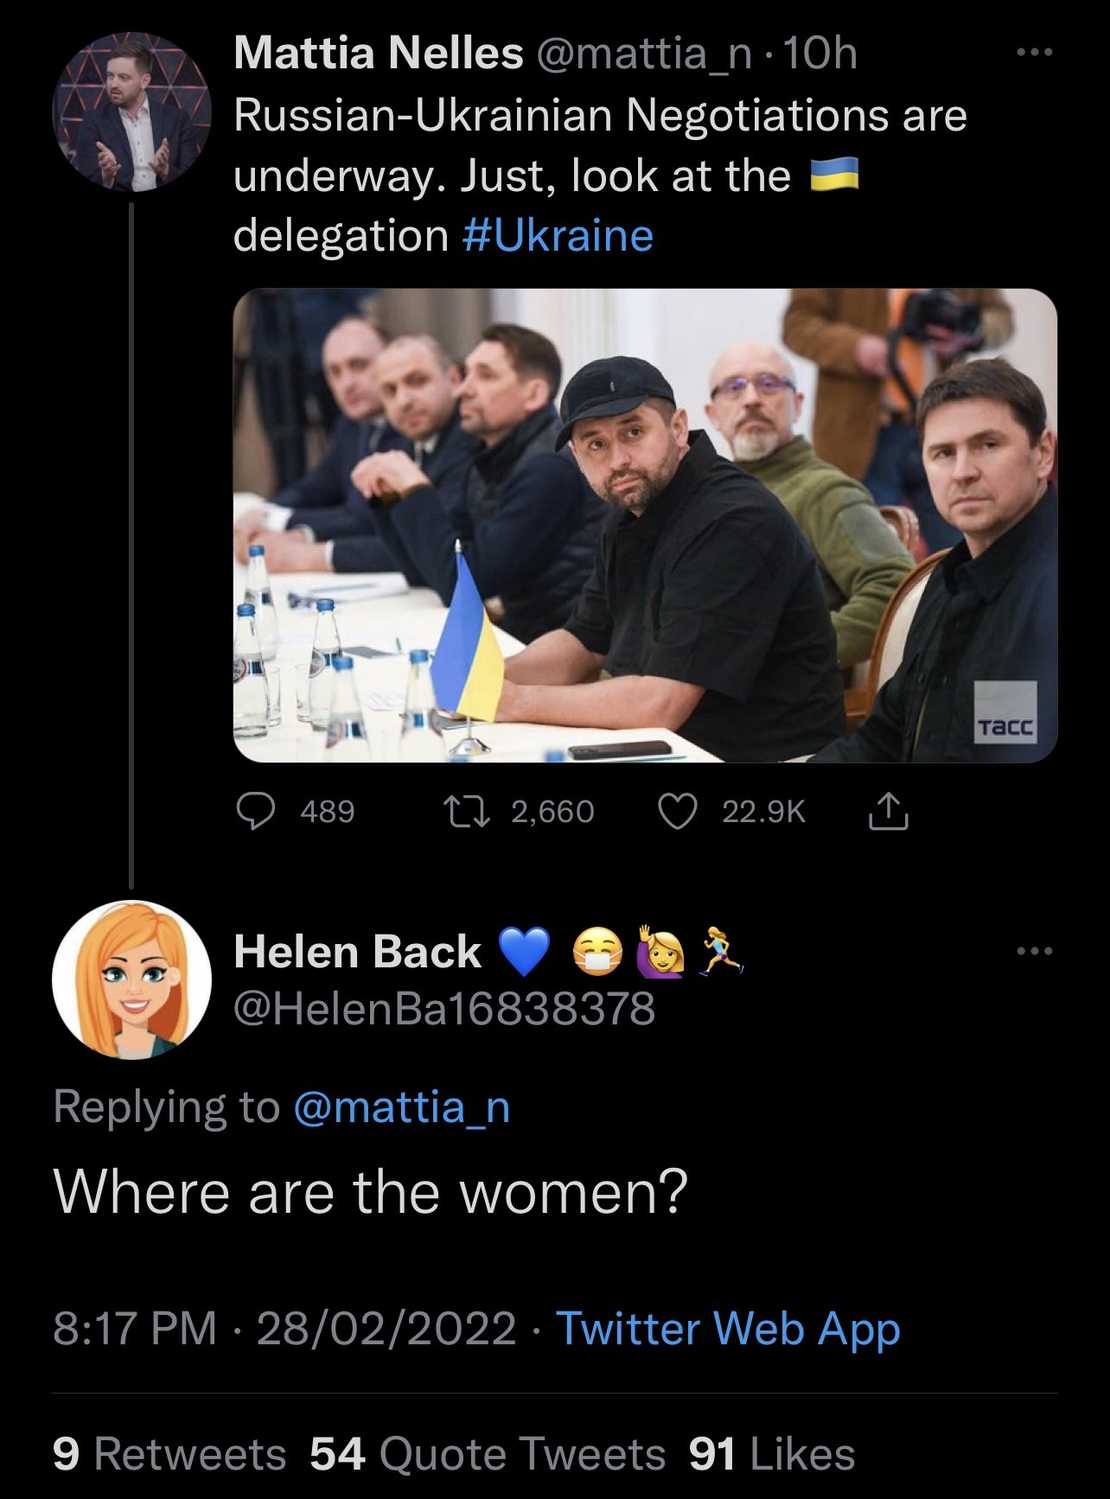 Ukraine Women